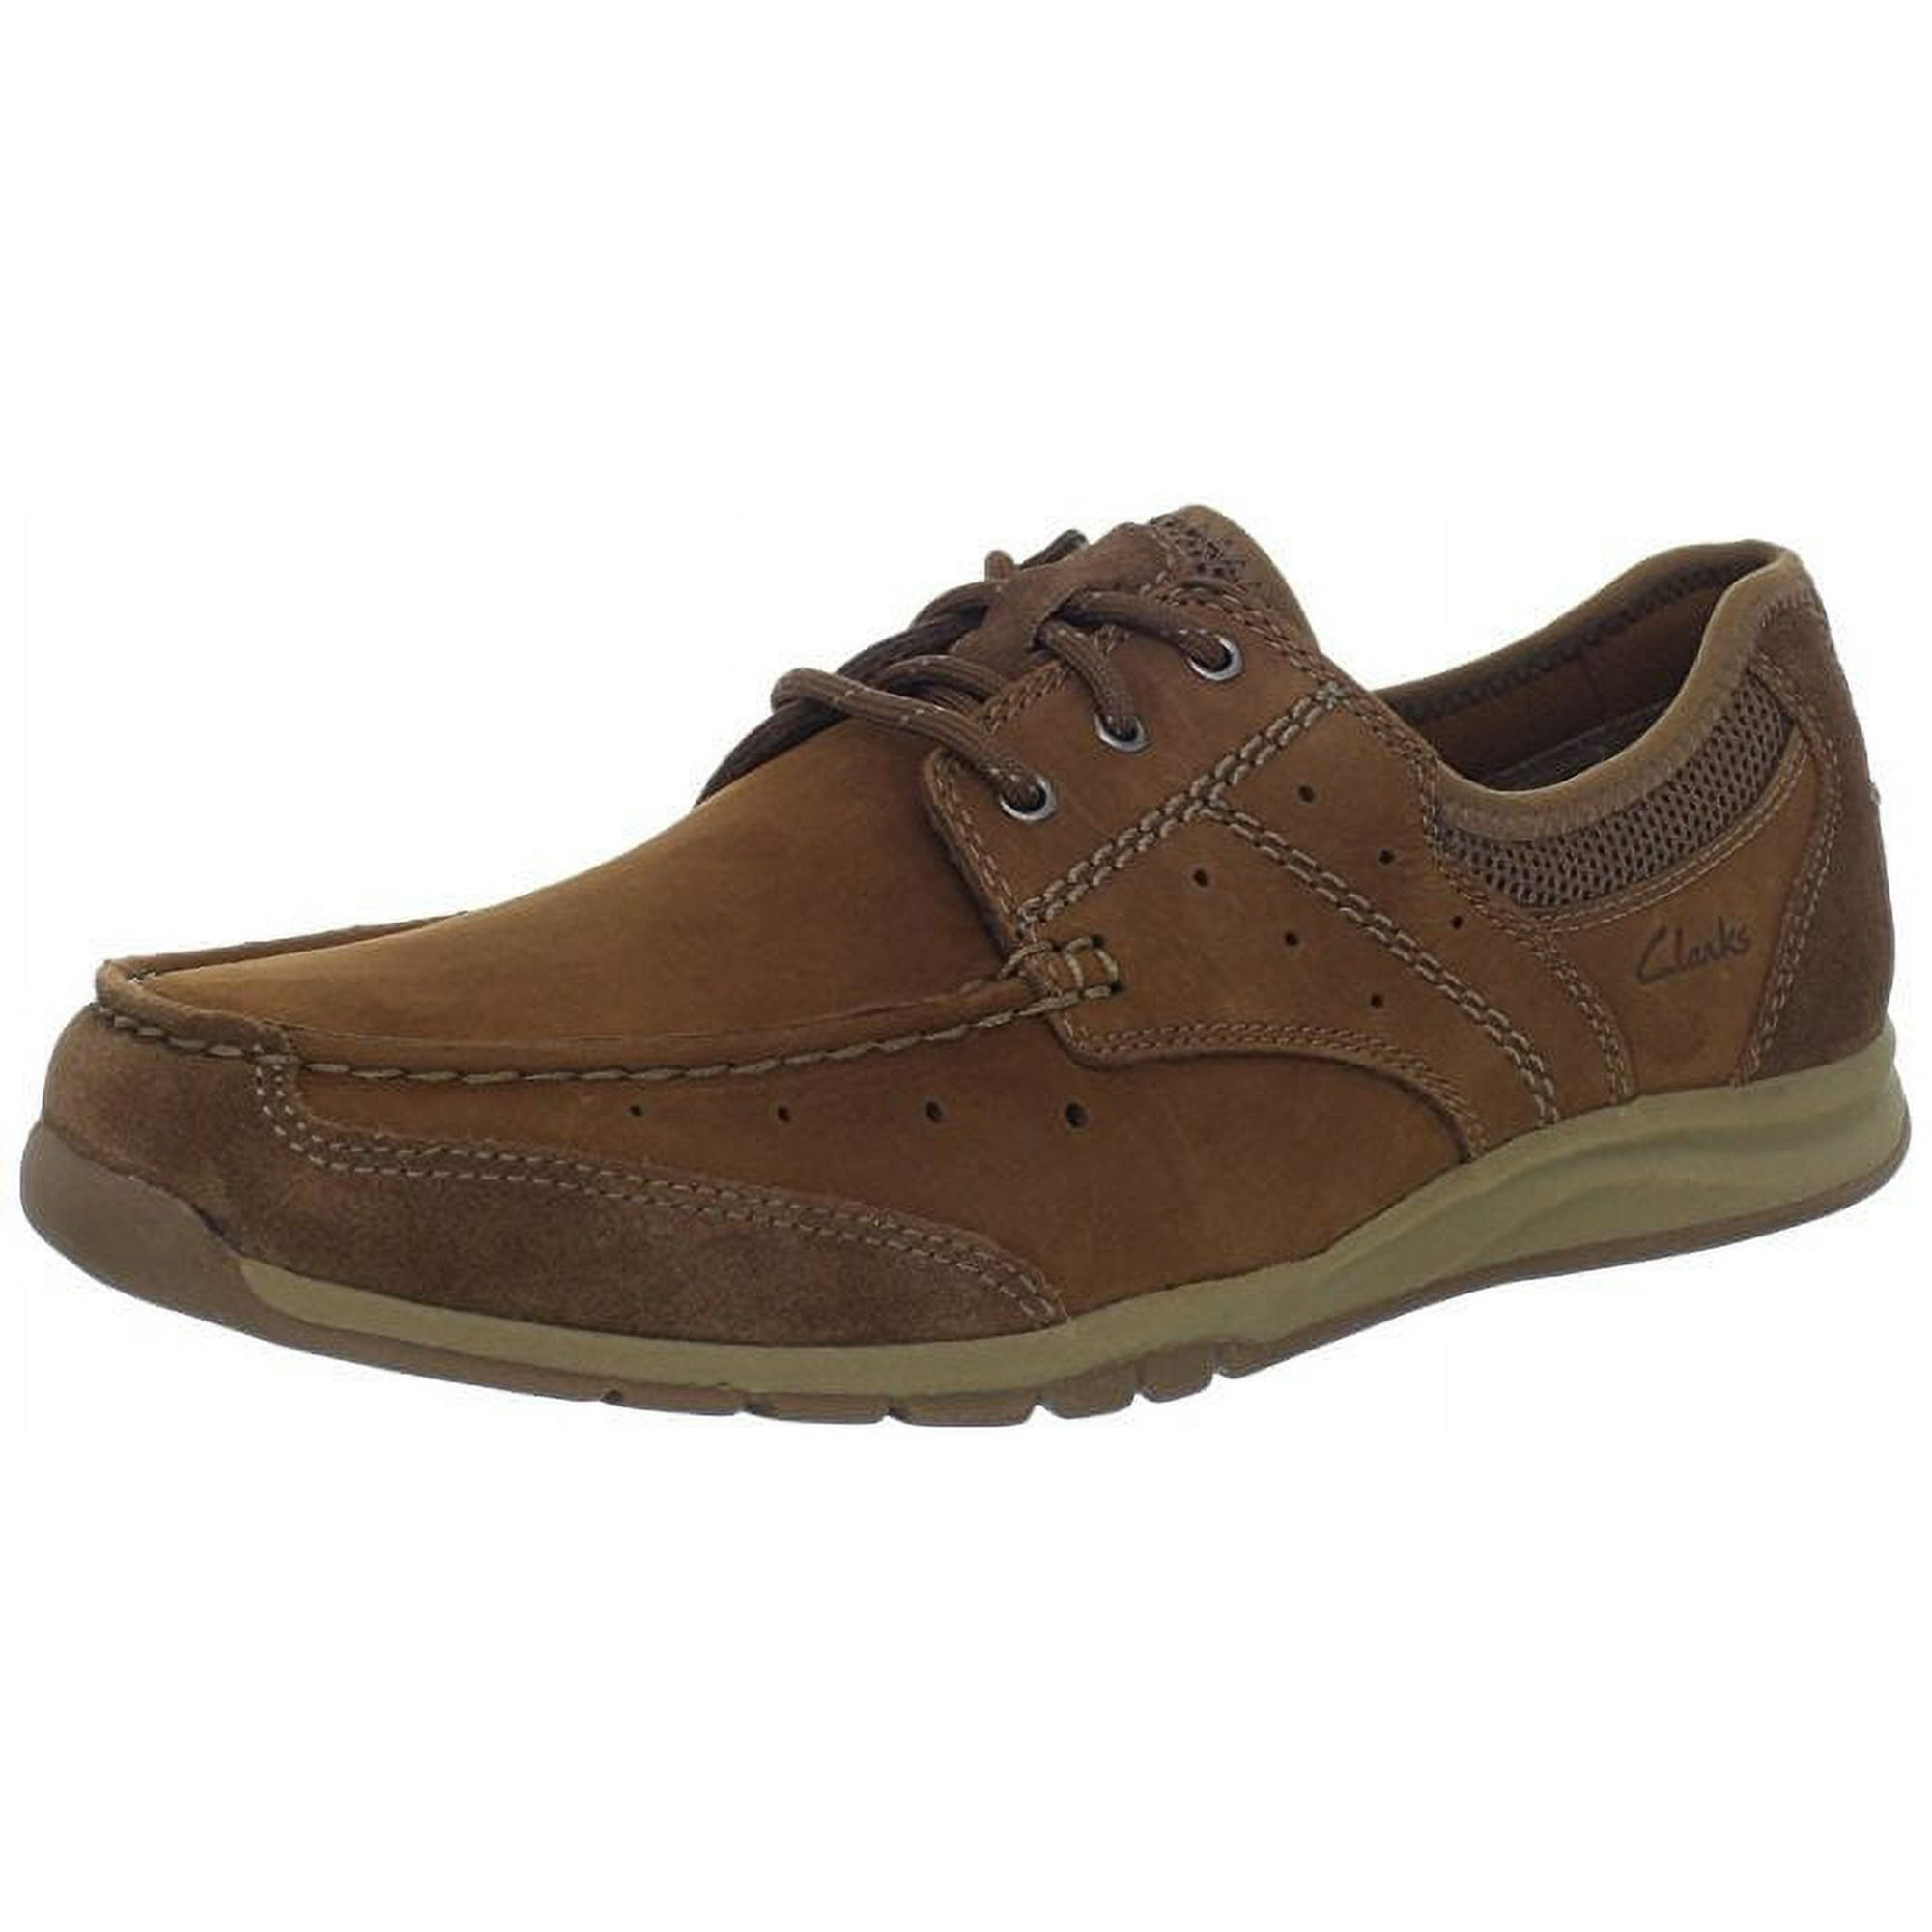 Men's Armada Oxfords Fashion Suede Shoes - Tan Brown - Walmart.com